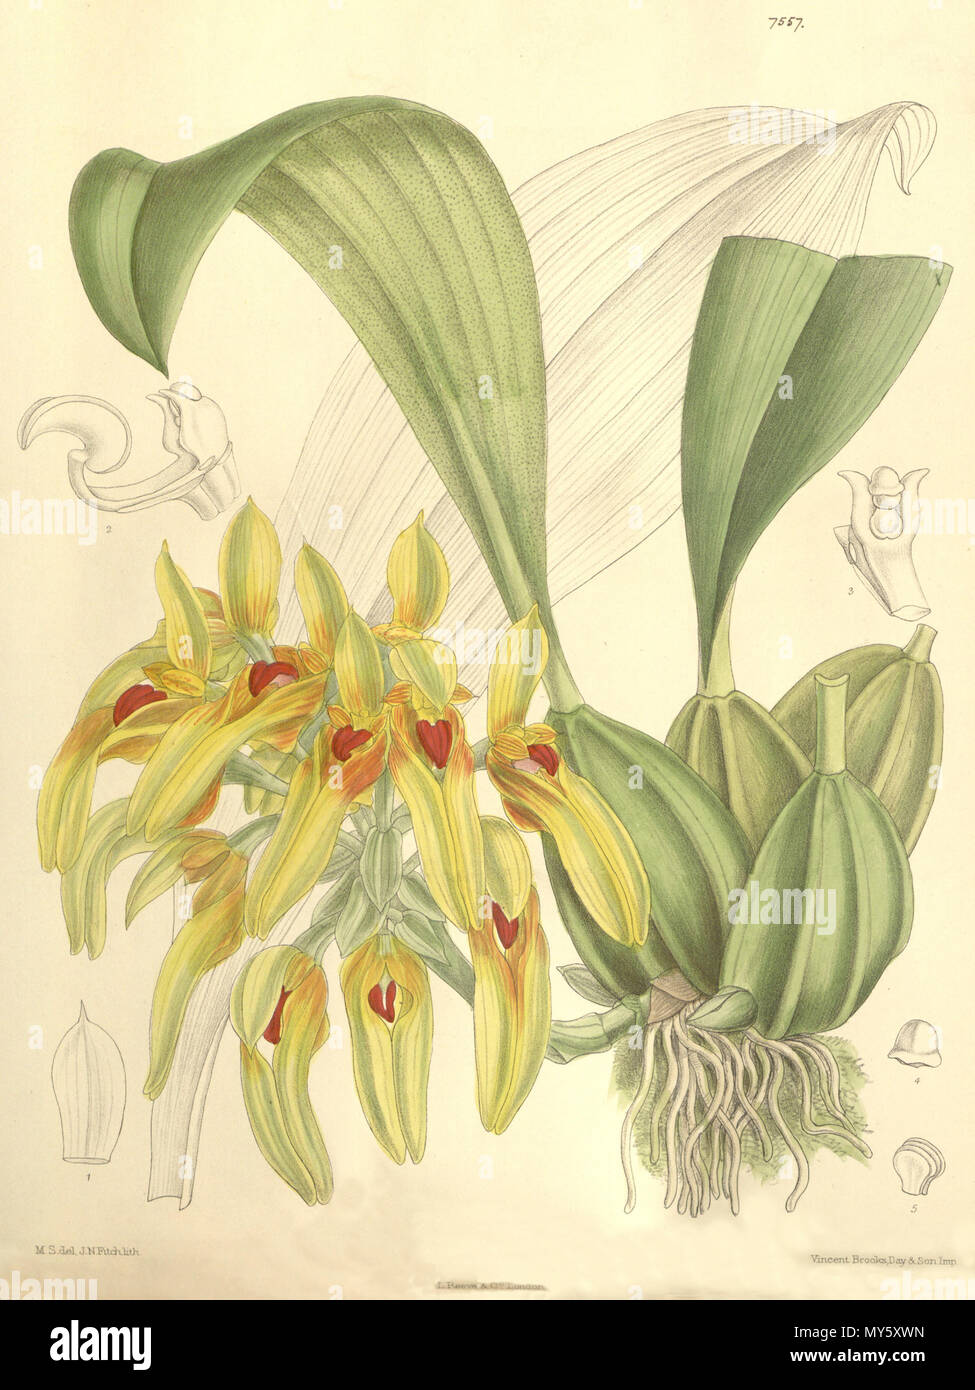 . Illustration of Bulbophyllum graveolens (as Cirrhopetalum robustum) . 1897. M. S. del. ( = Matilda Smith, 1854-1926), J. N. Fitch lith. ( = John Nugent Fitch, 1840–1927) Description by Joseph Dalton Hooker (1817—1911) 90 Bulbophyllum graveolens (as Cirrhopetalum robustum) - Curtis' 123 (Ser. 3 no. 53) pl. 7557 (1897) Stock Photo